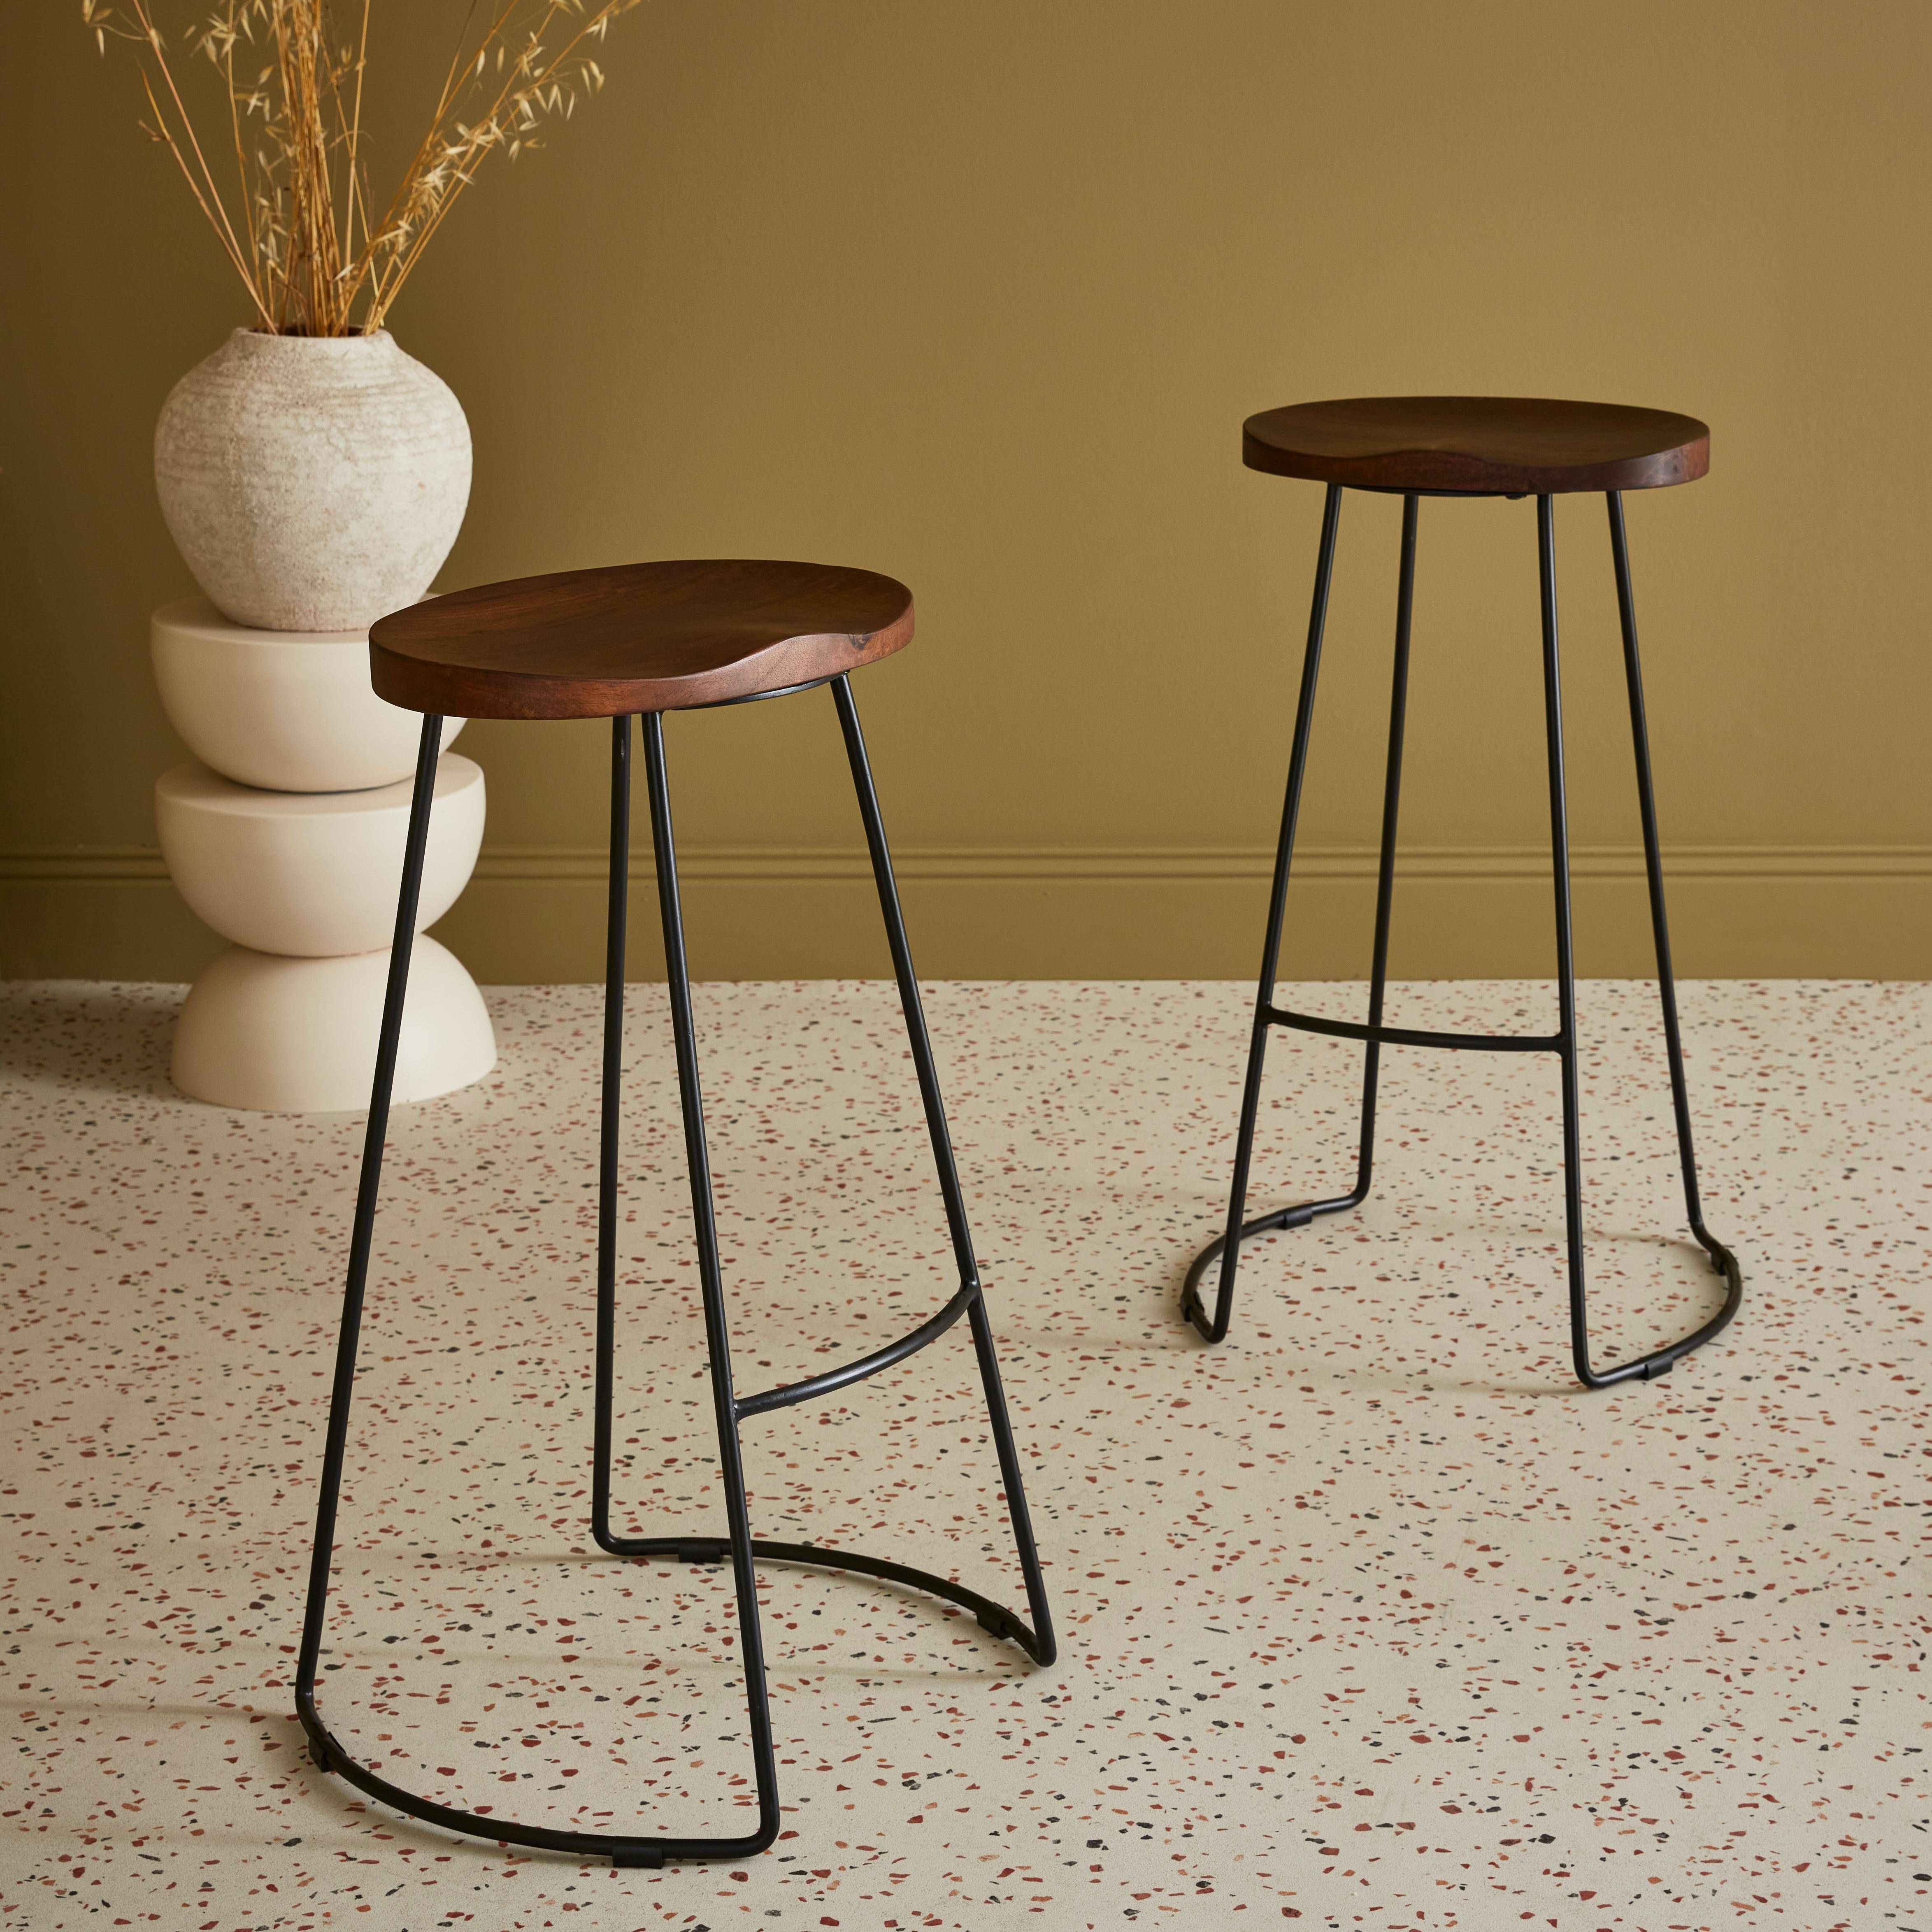 Pair of industrial metal and wooden bar stools, 47x40x75cm, Jaya, Light Walnut, Mango wood seat, black metal legs Photo1